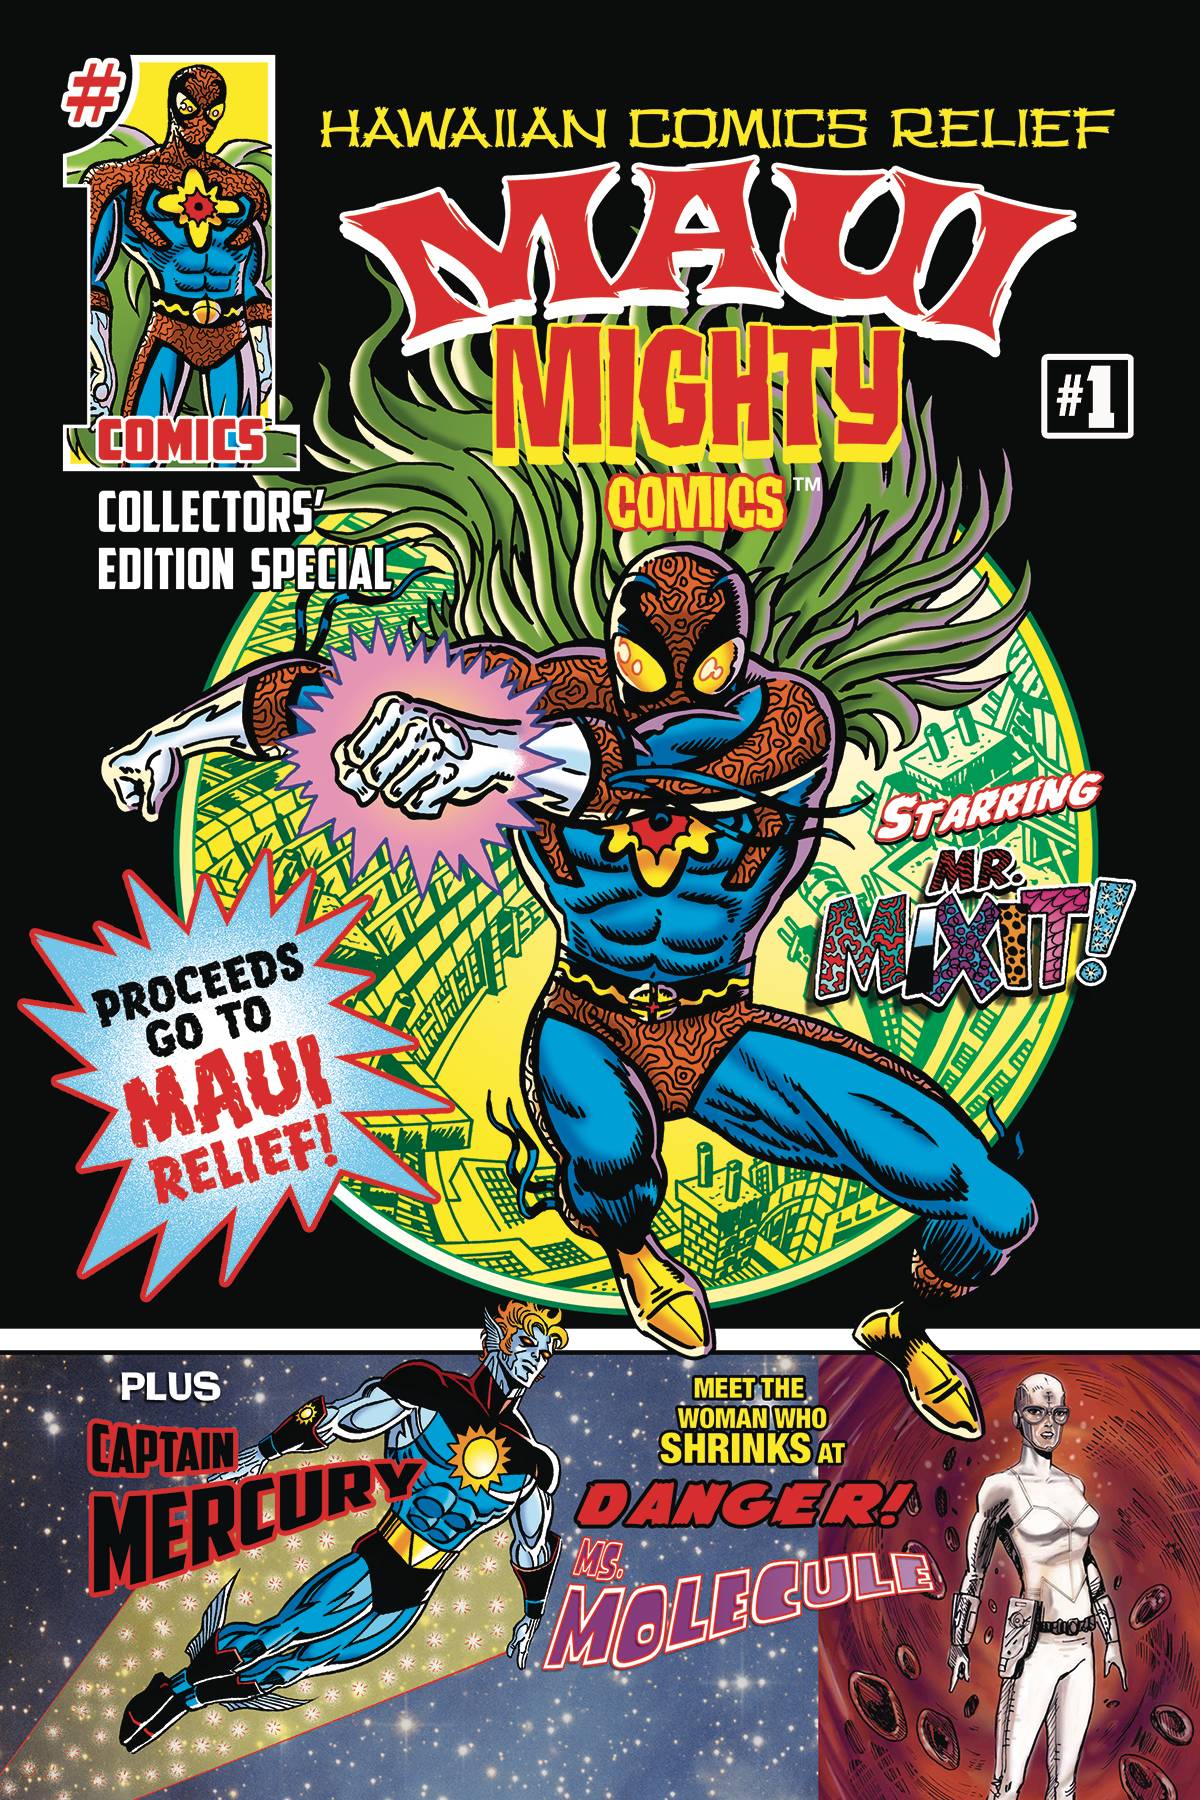 MAUI MIGHTY COMICS #1